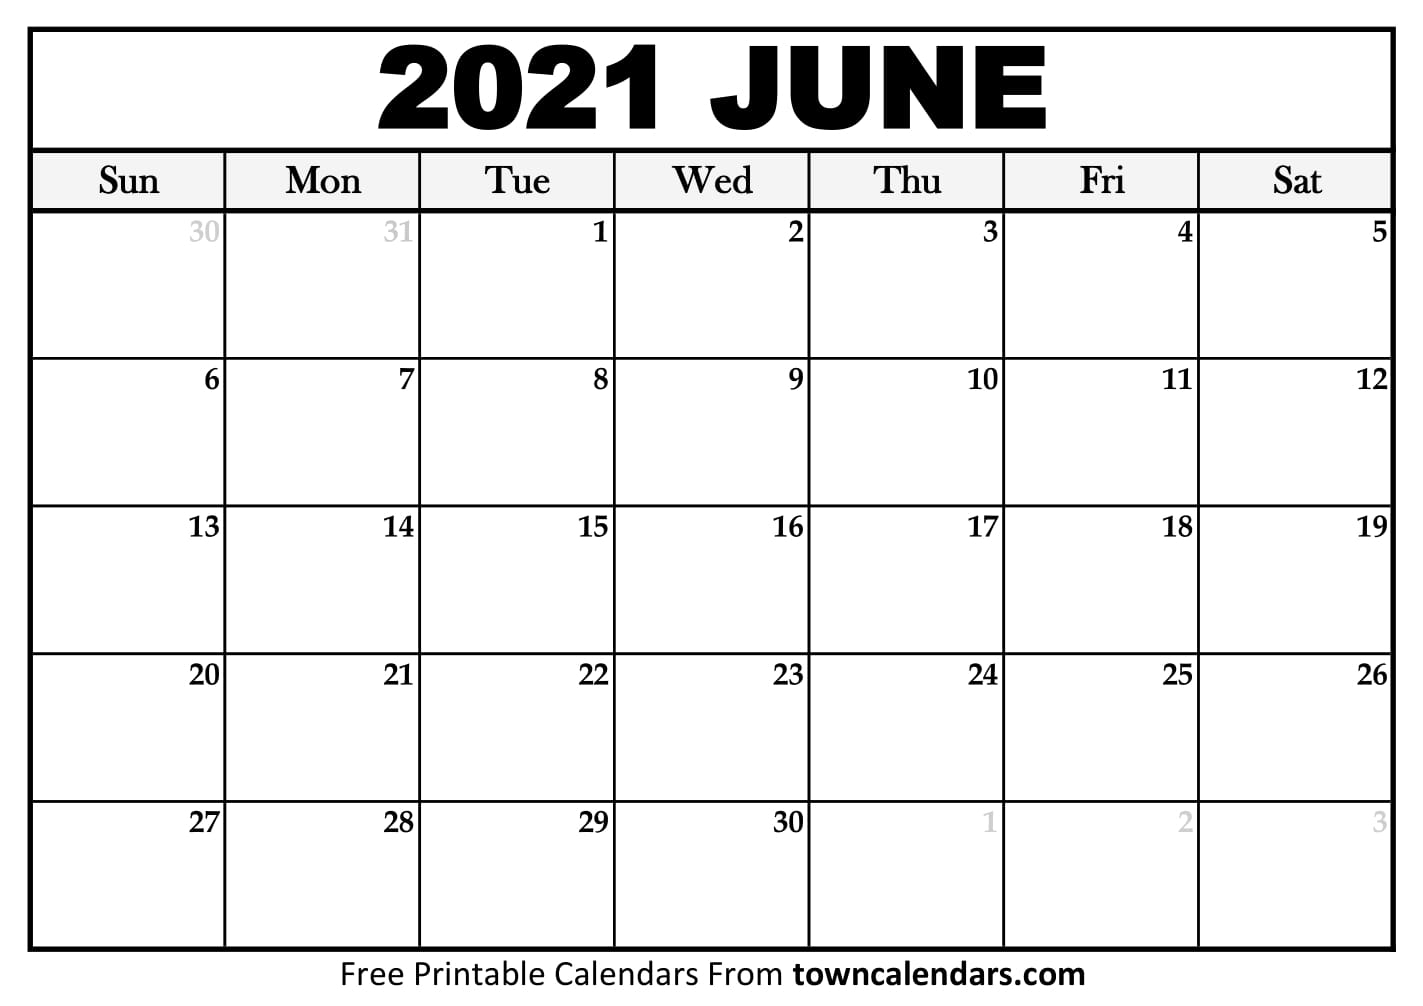 Printable June 2021 Calendar - Towncalendars